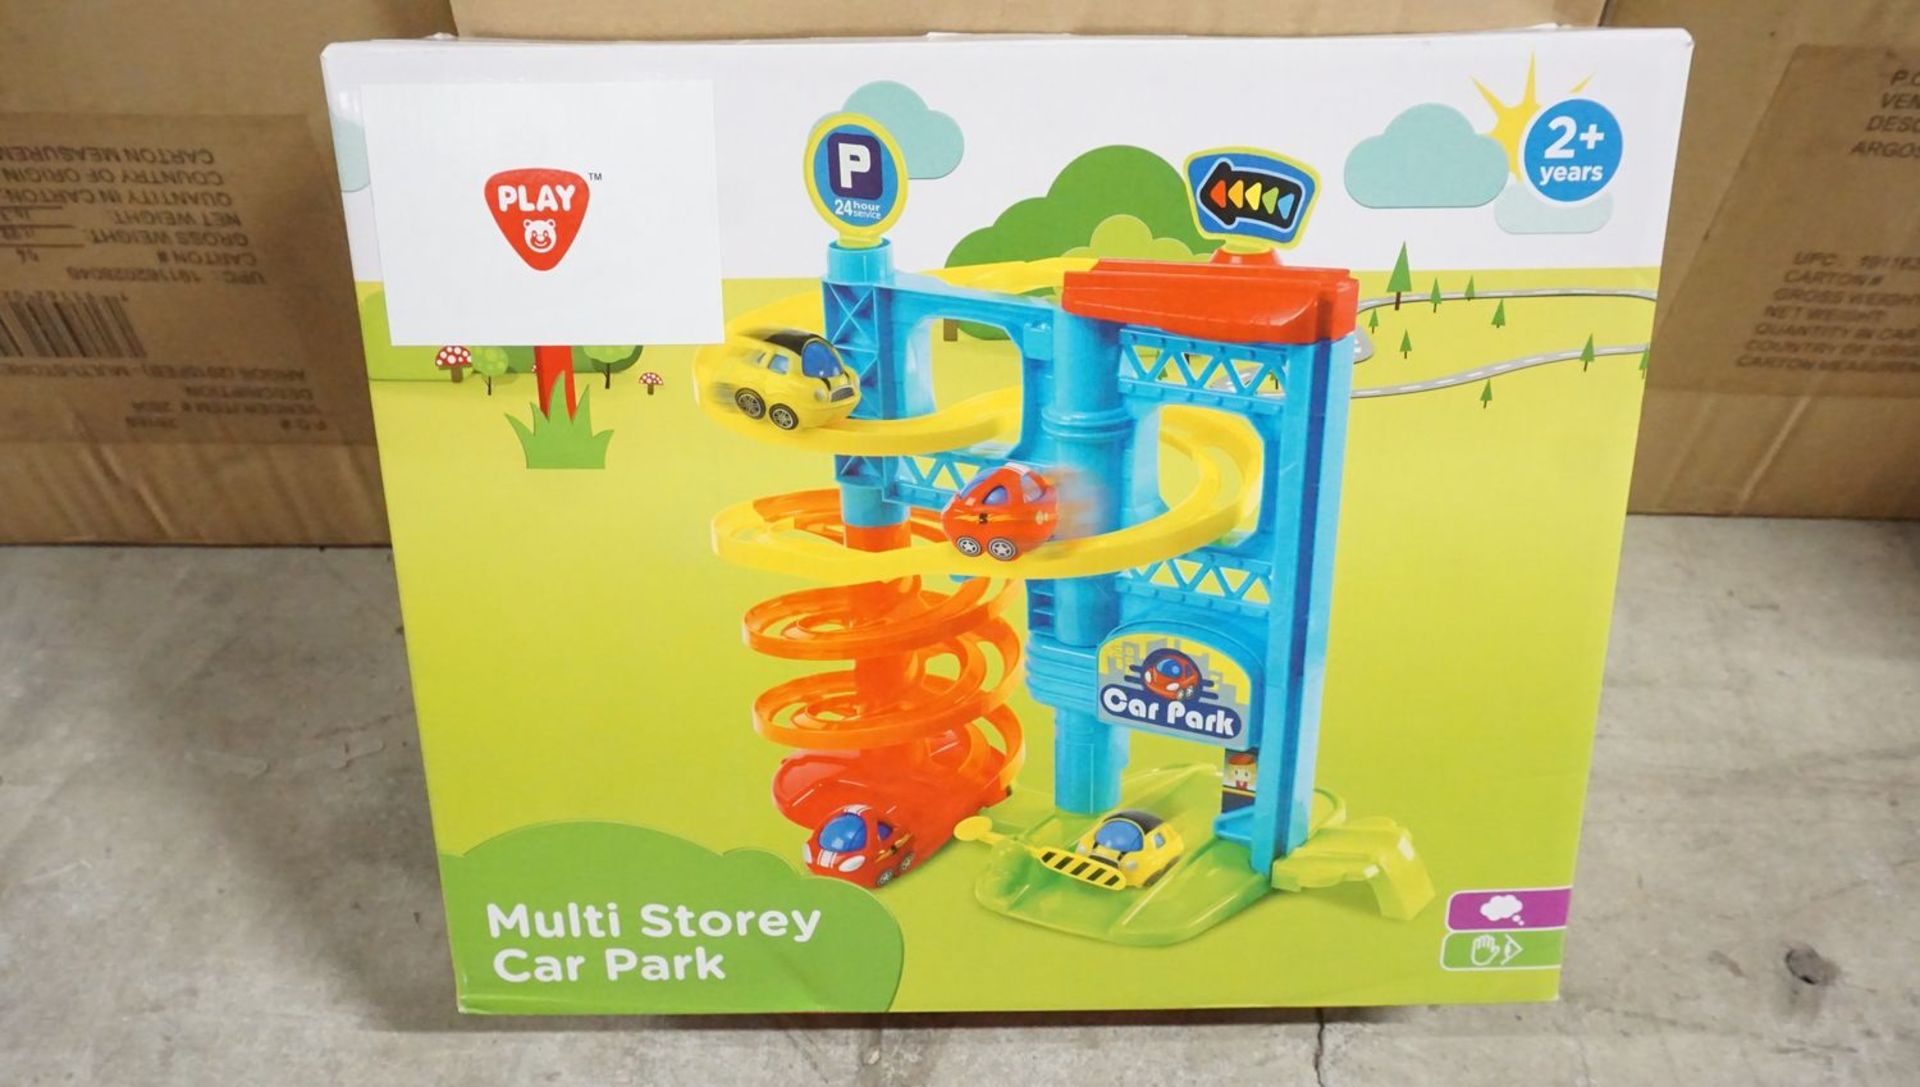 BOXES - PLAY MULTI-STOREY CAR PARK (3 PCS/BOX) - Image 2 of 2